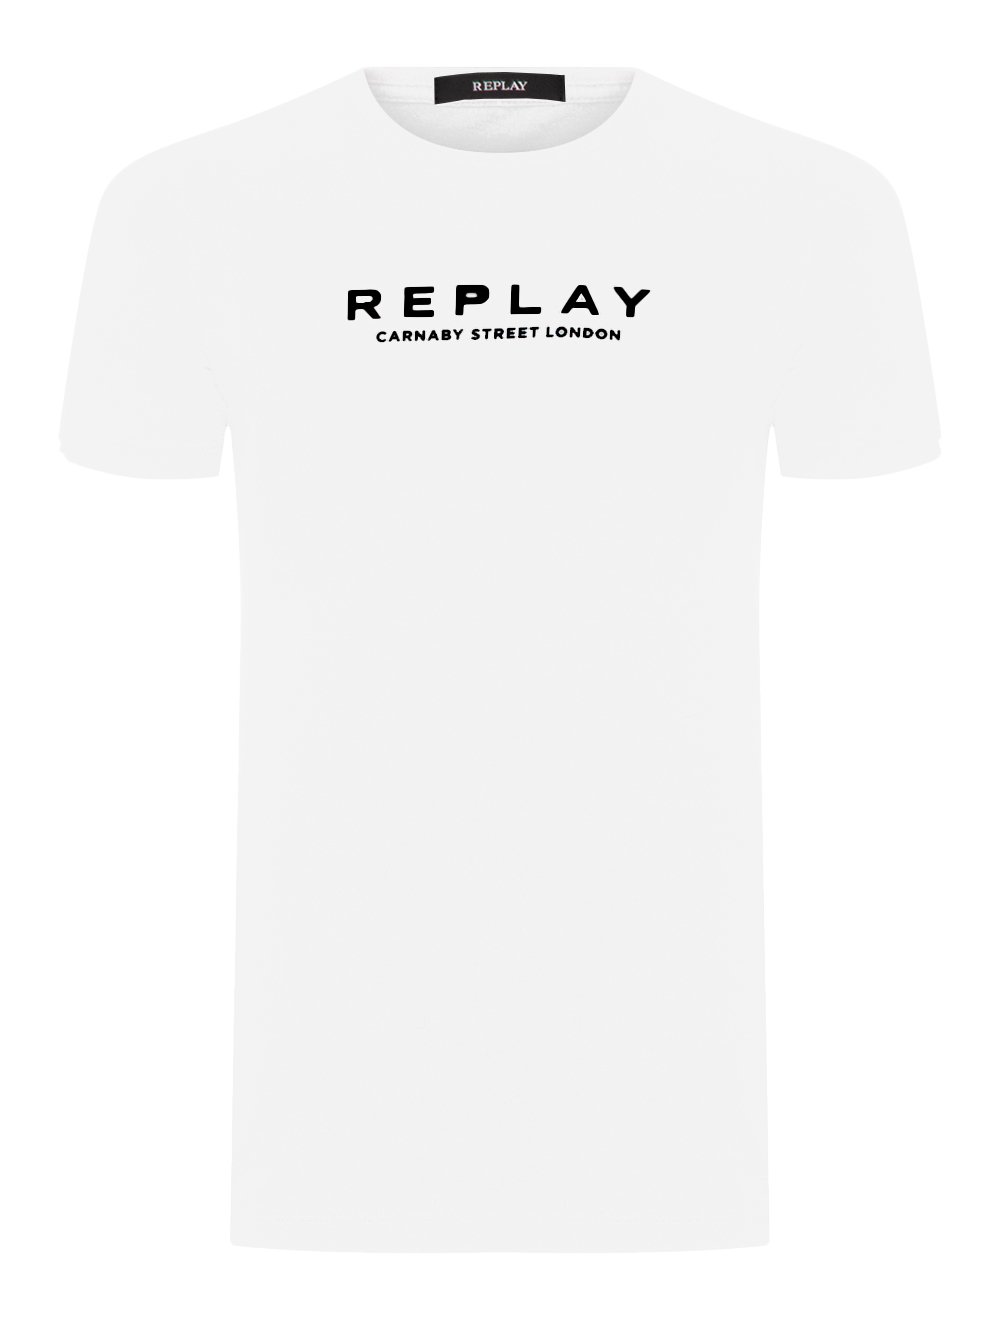 Camiseta Replay Masculina Carnaby Street London Branca